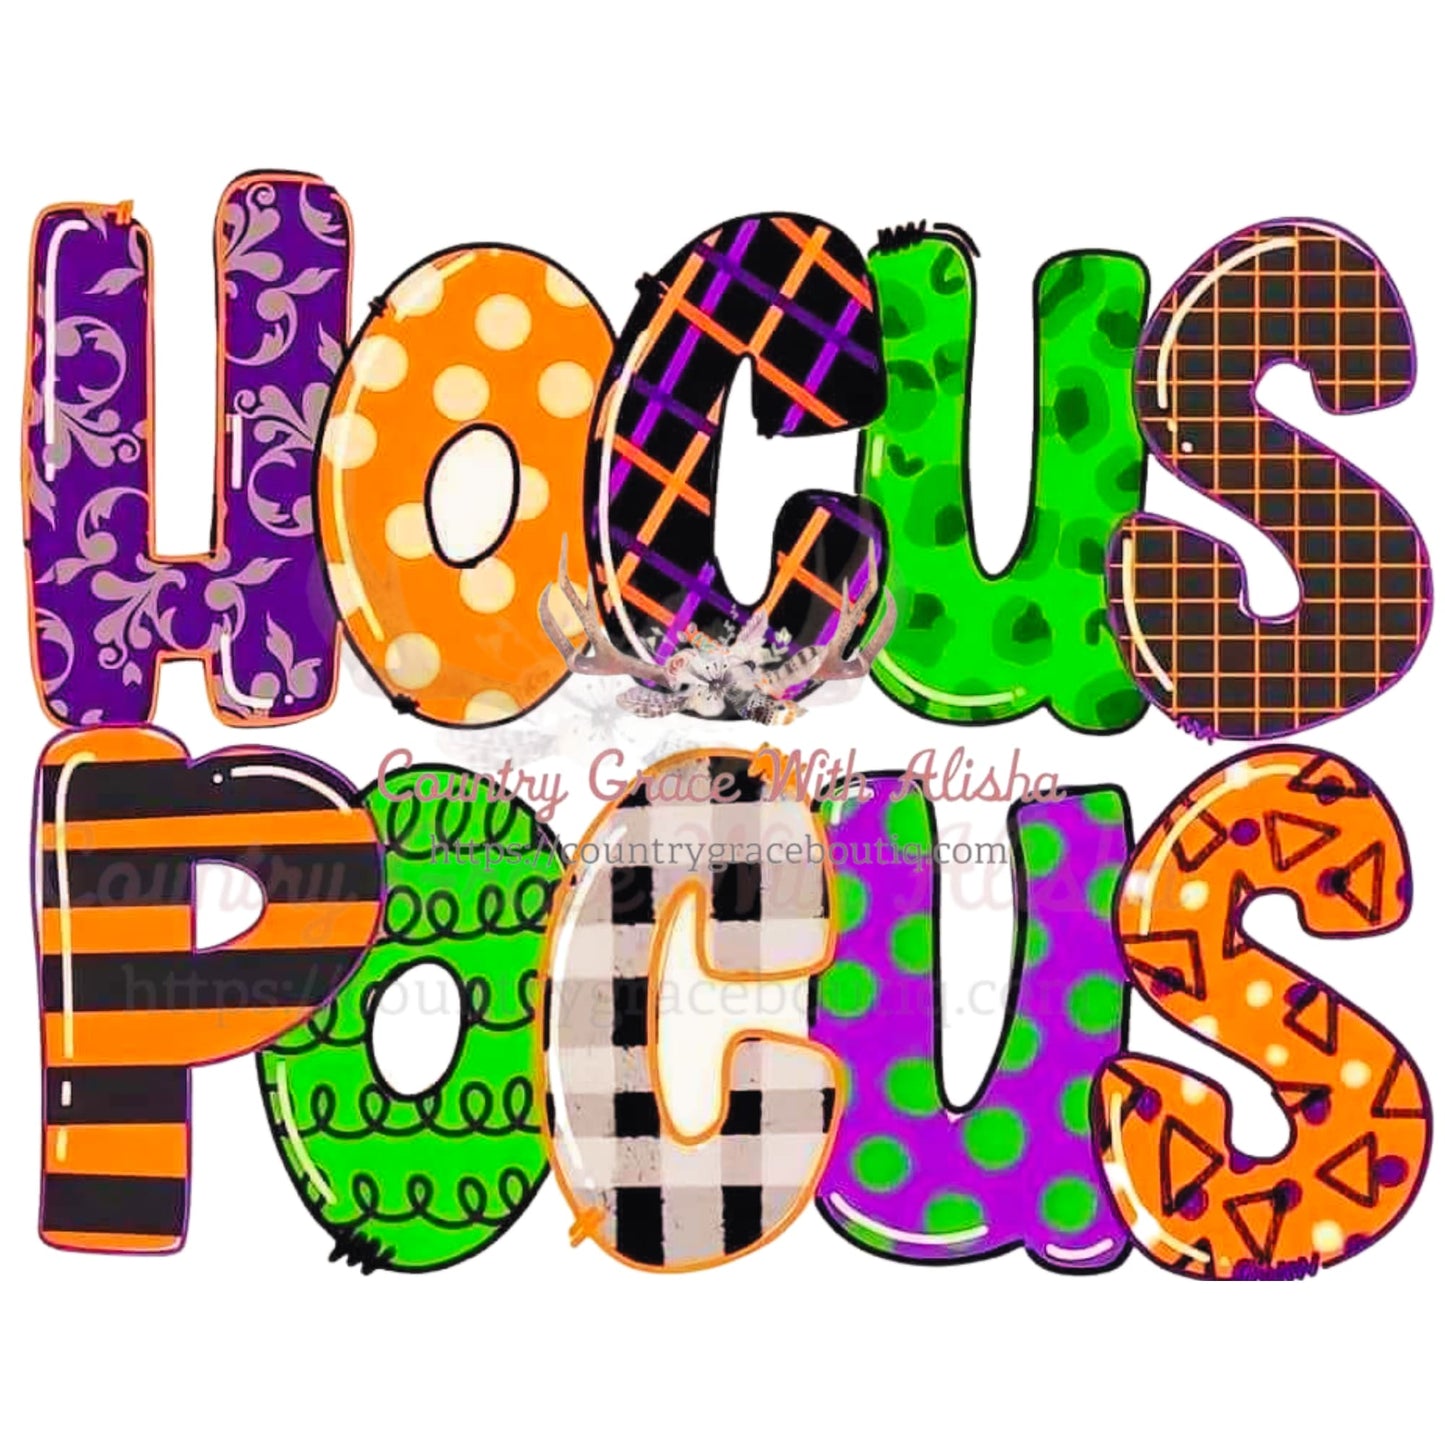 Hocus Pocus Sublimation Transfer - Sub $1.50 Country Grace 